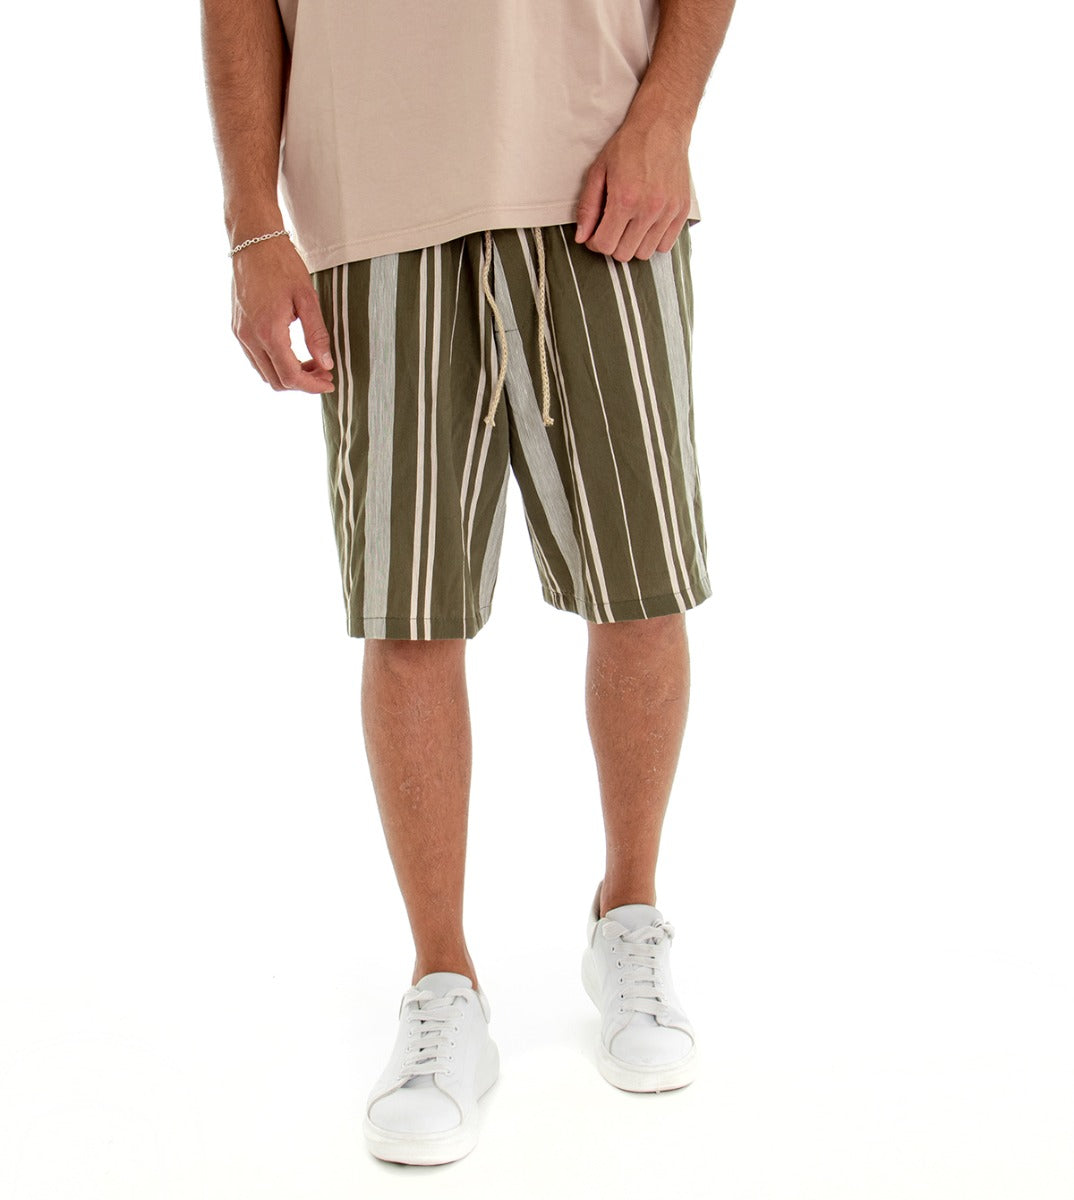 Bermuda Shorts Men's Shorts Striped Green Elastic GIOSAL-PC1542A